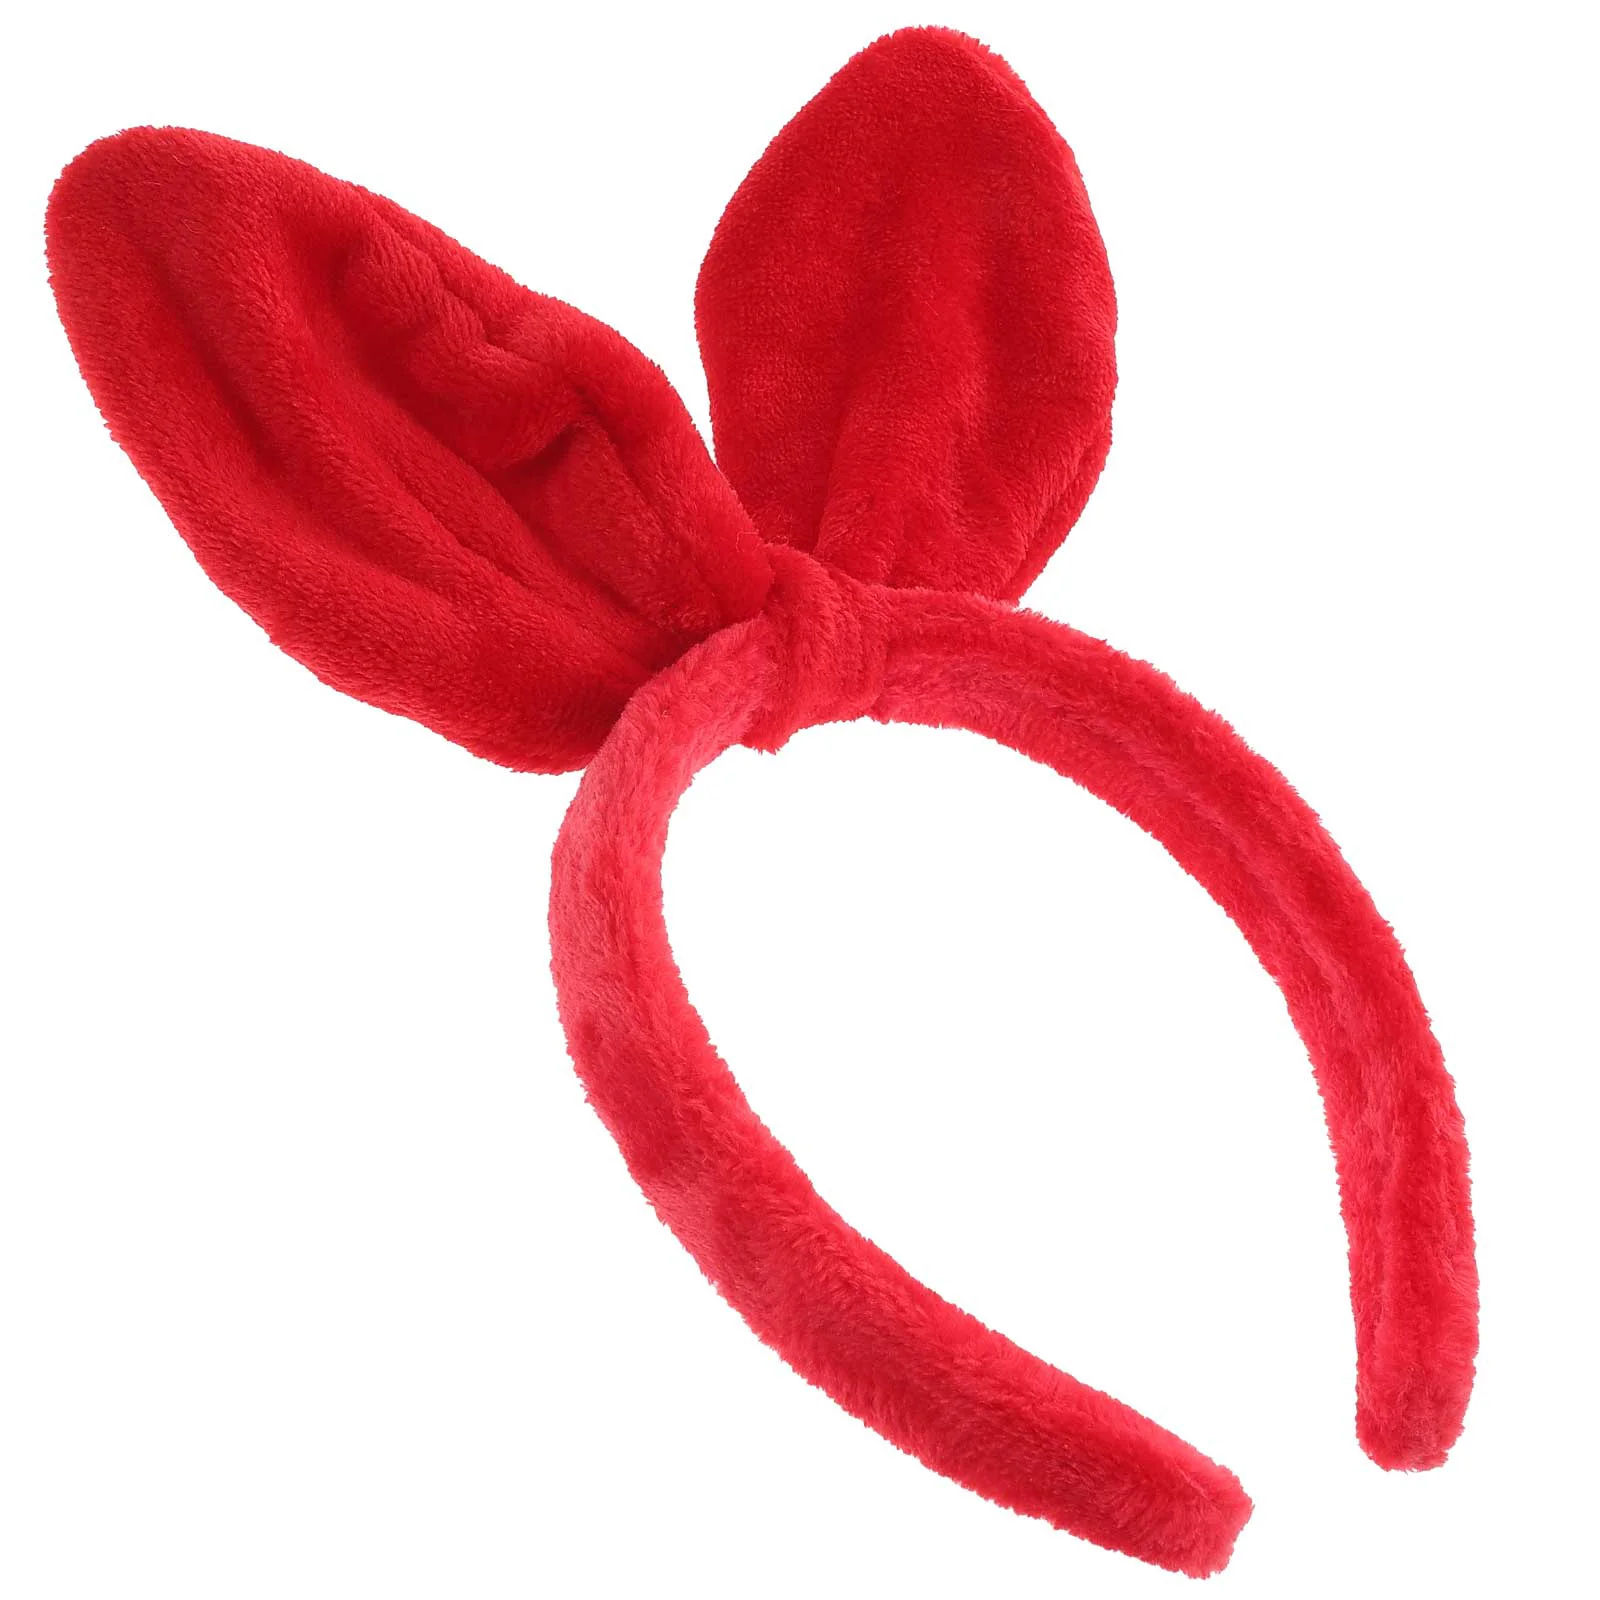 

Bunny Ear Headband Costumes Girls Party Decorations Headbands Hair Bulk Ears Adult Women Fabric Festival Miss